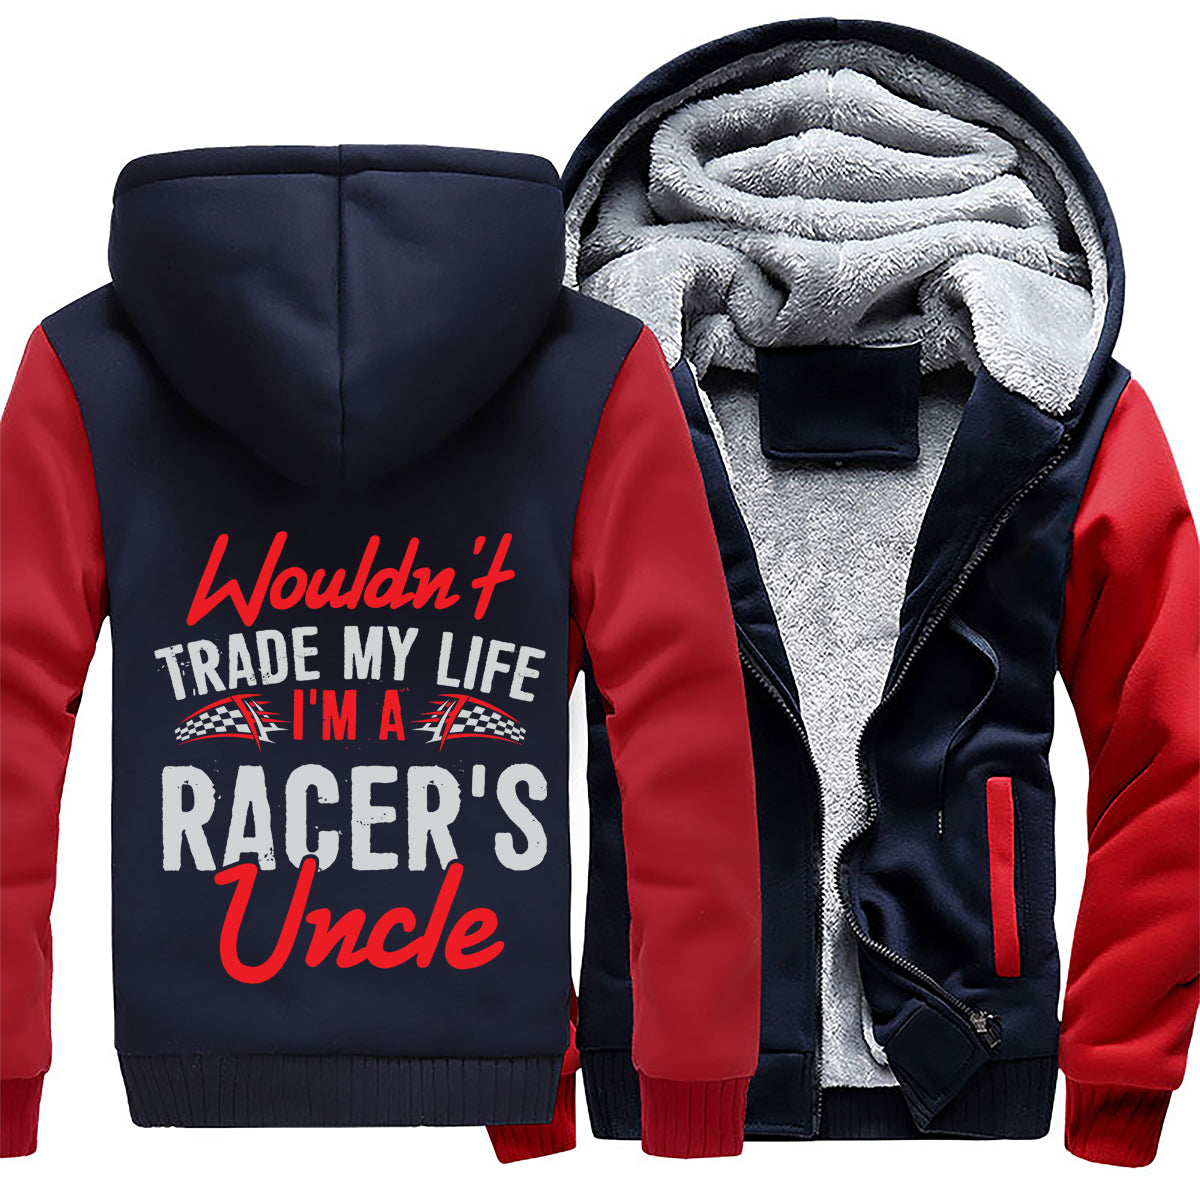 I'm A Racer's Uncle Jacket 